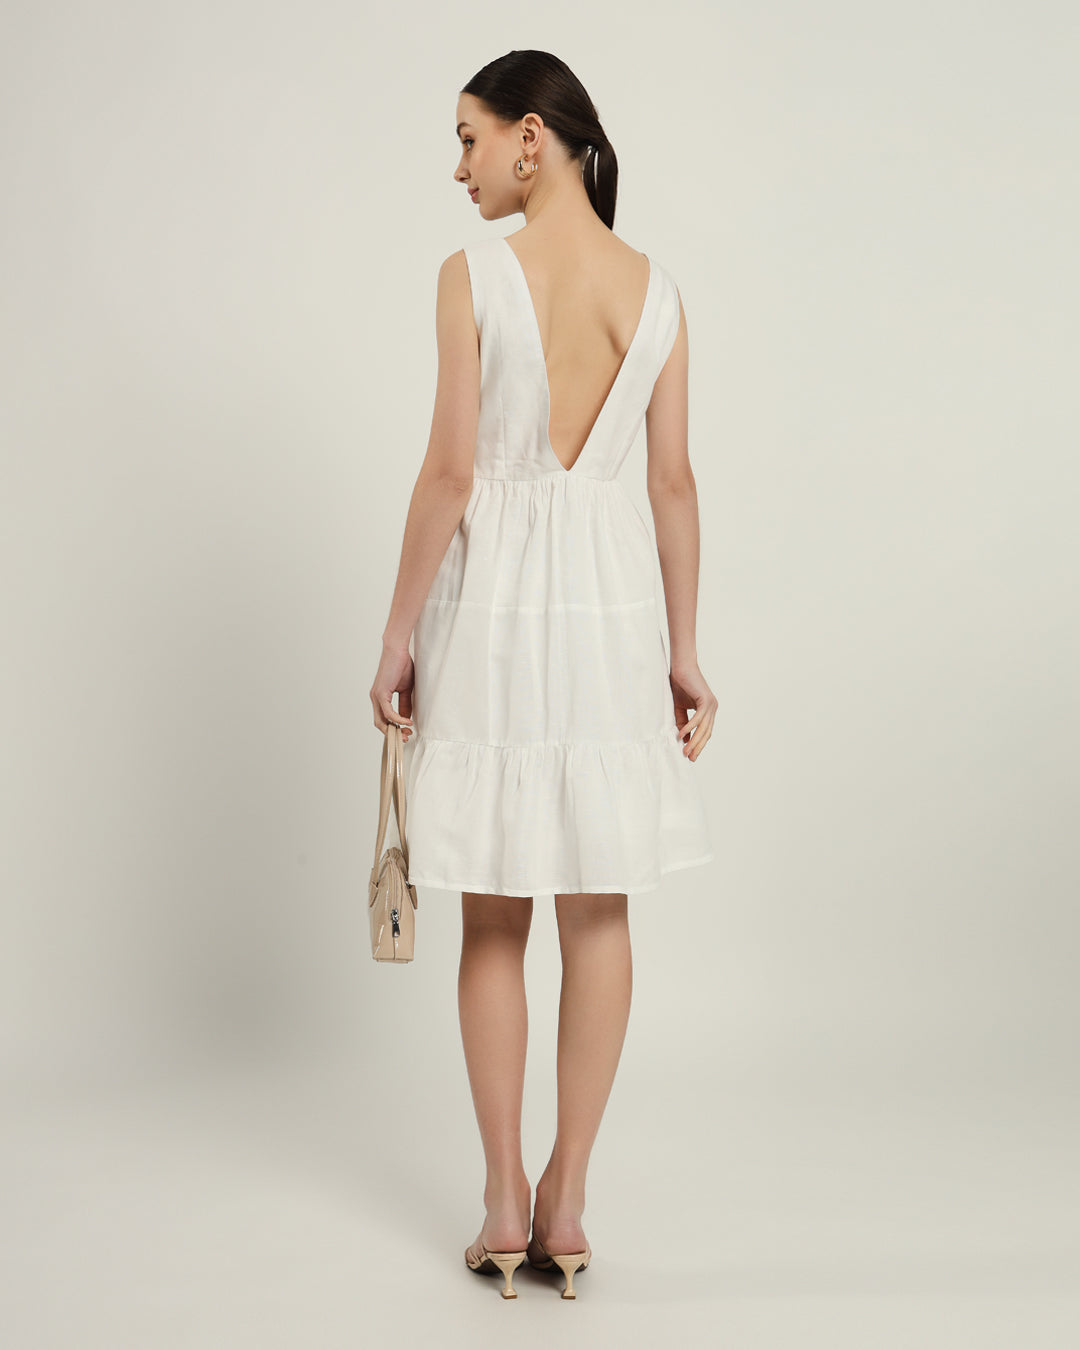 The Minsk Daisy White Linen Dress